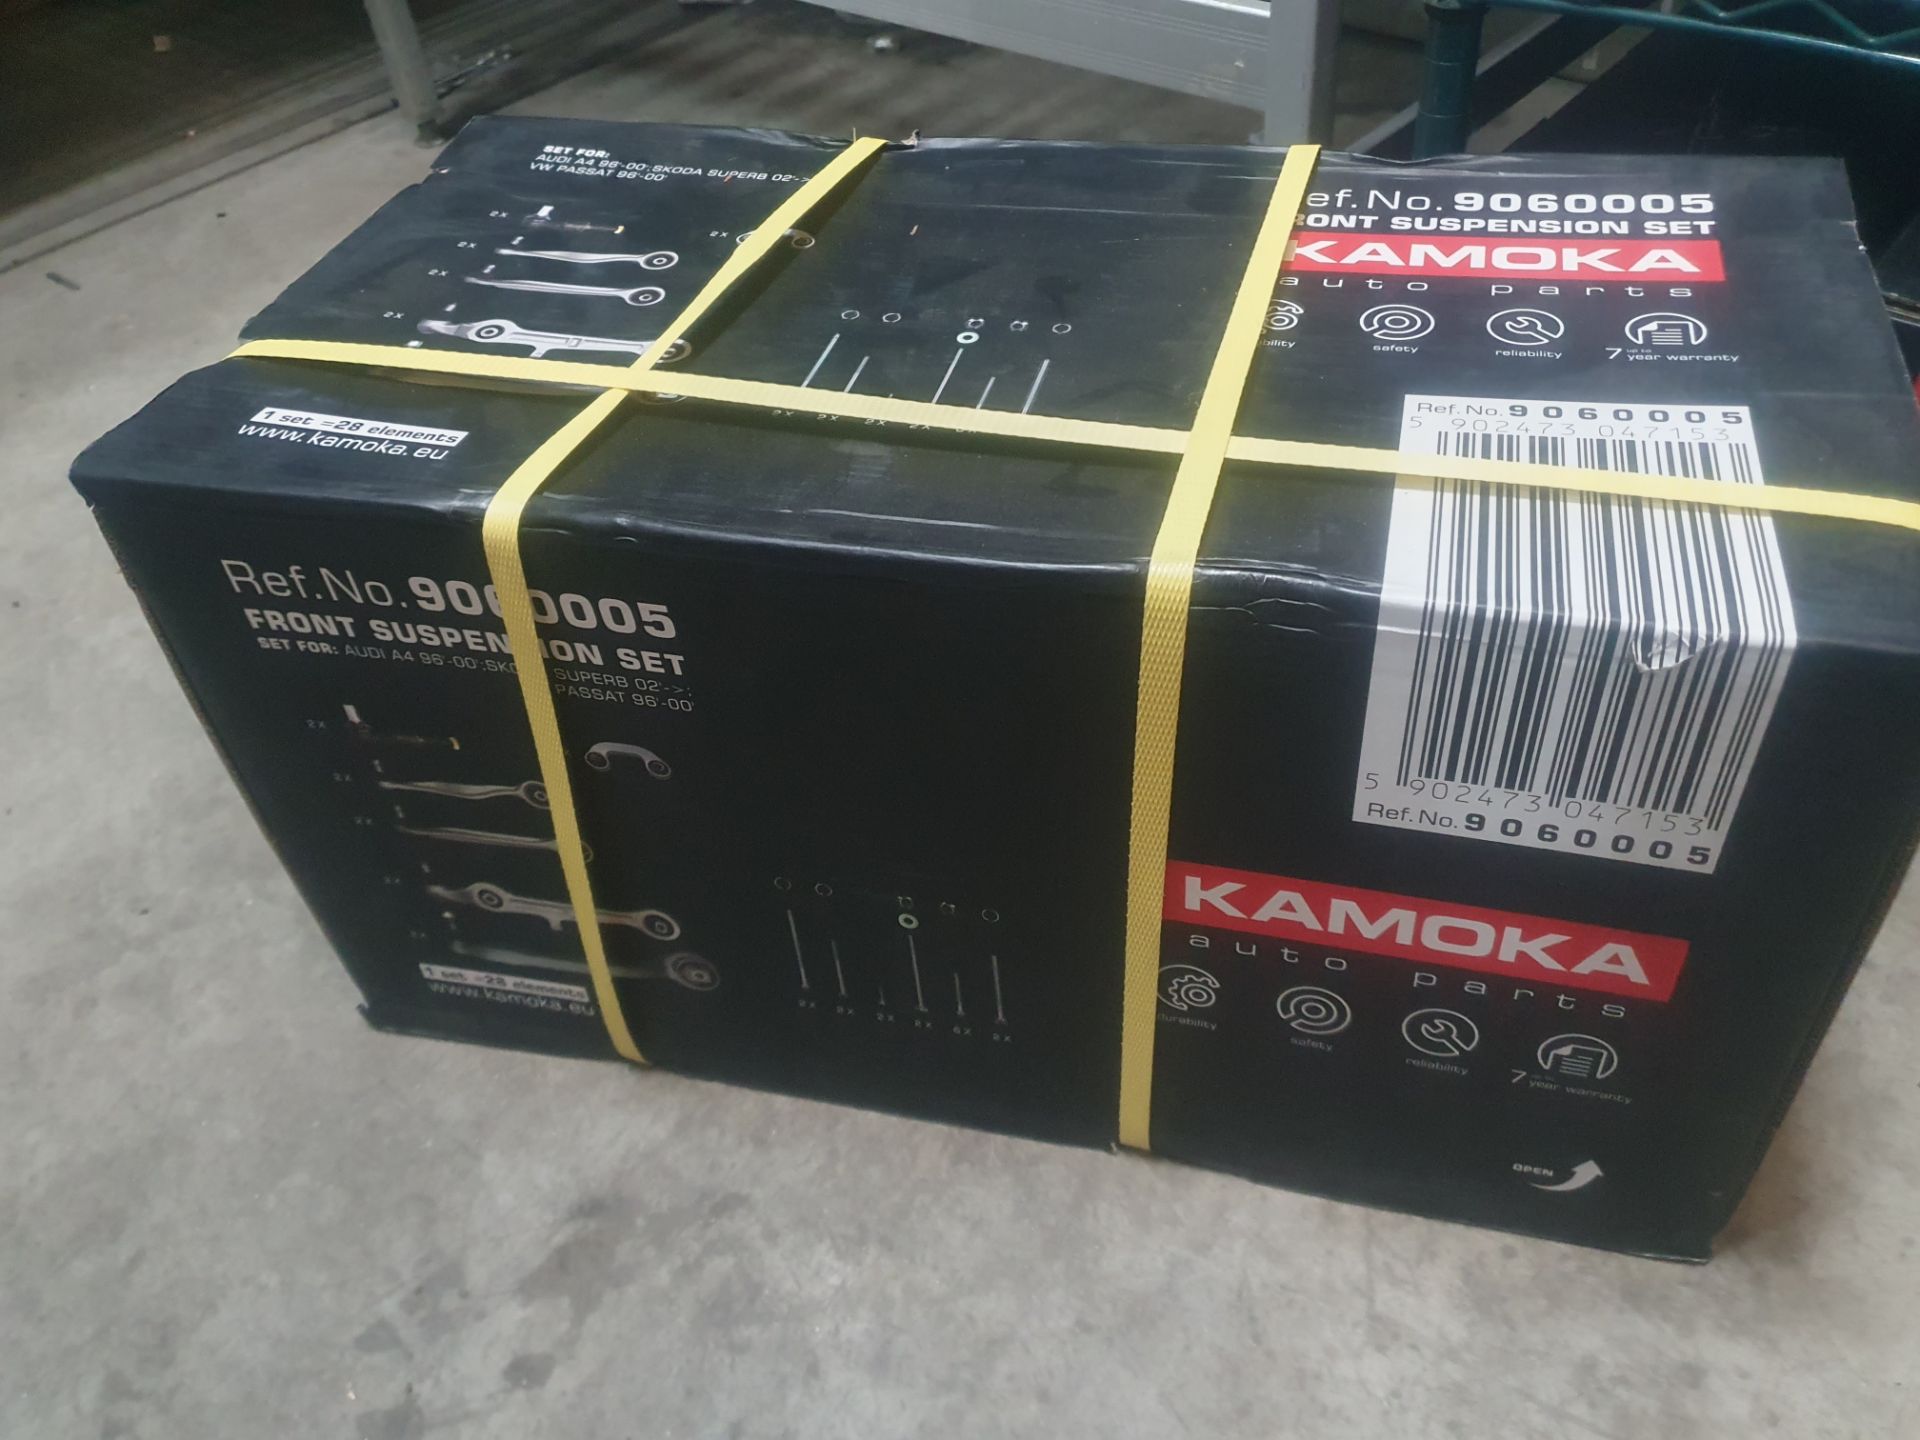 Kamoka front suspension set